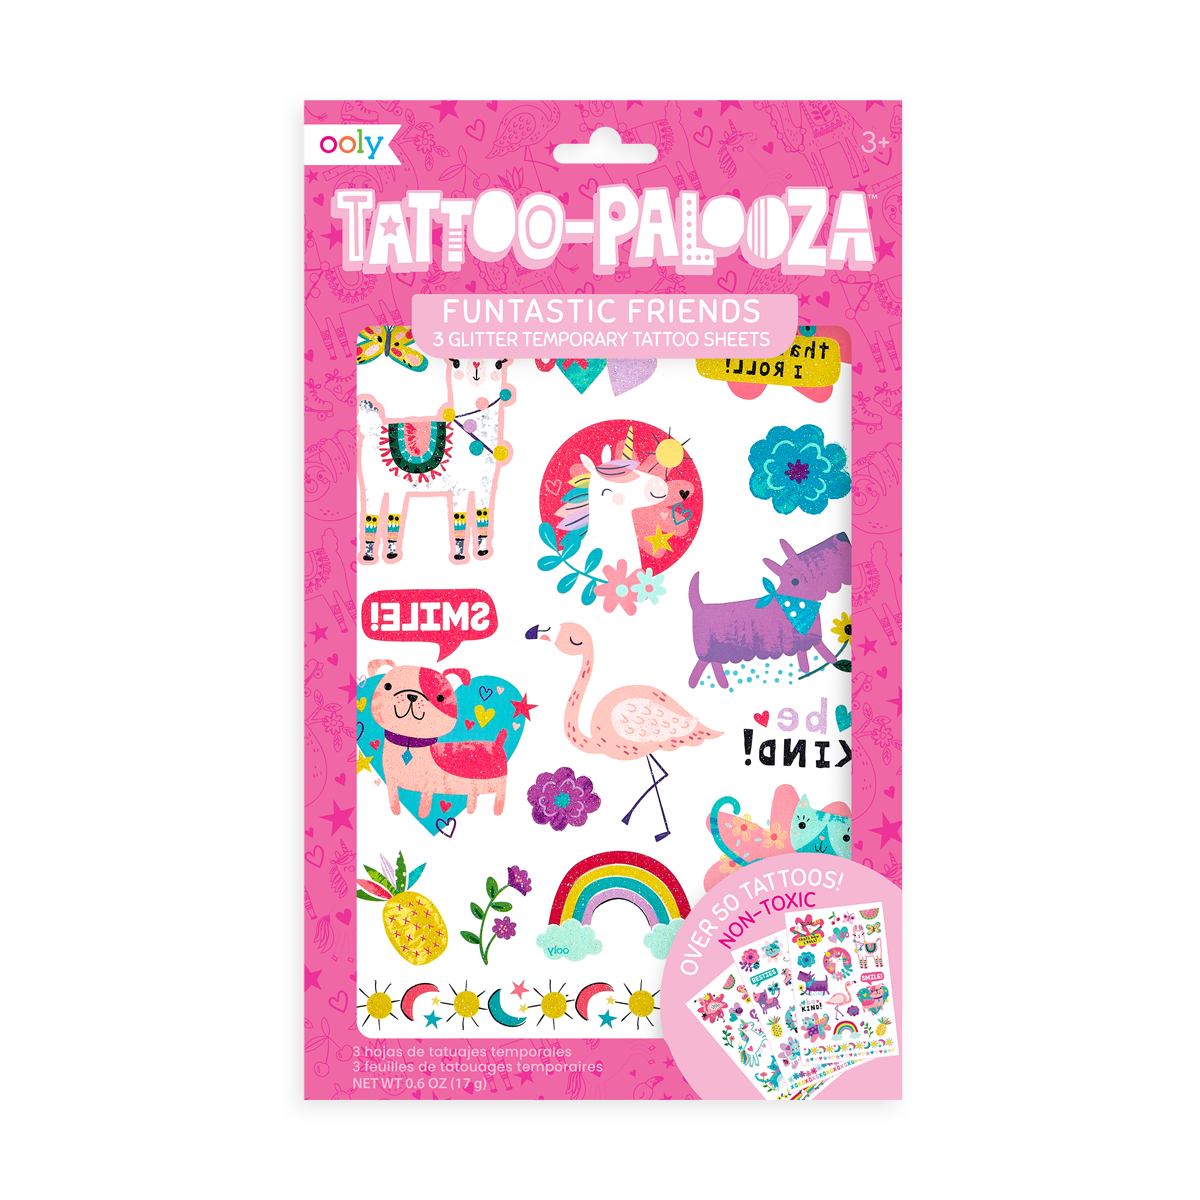 OOLY Tattoo Palooza Funtastic Friends in packaging